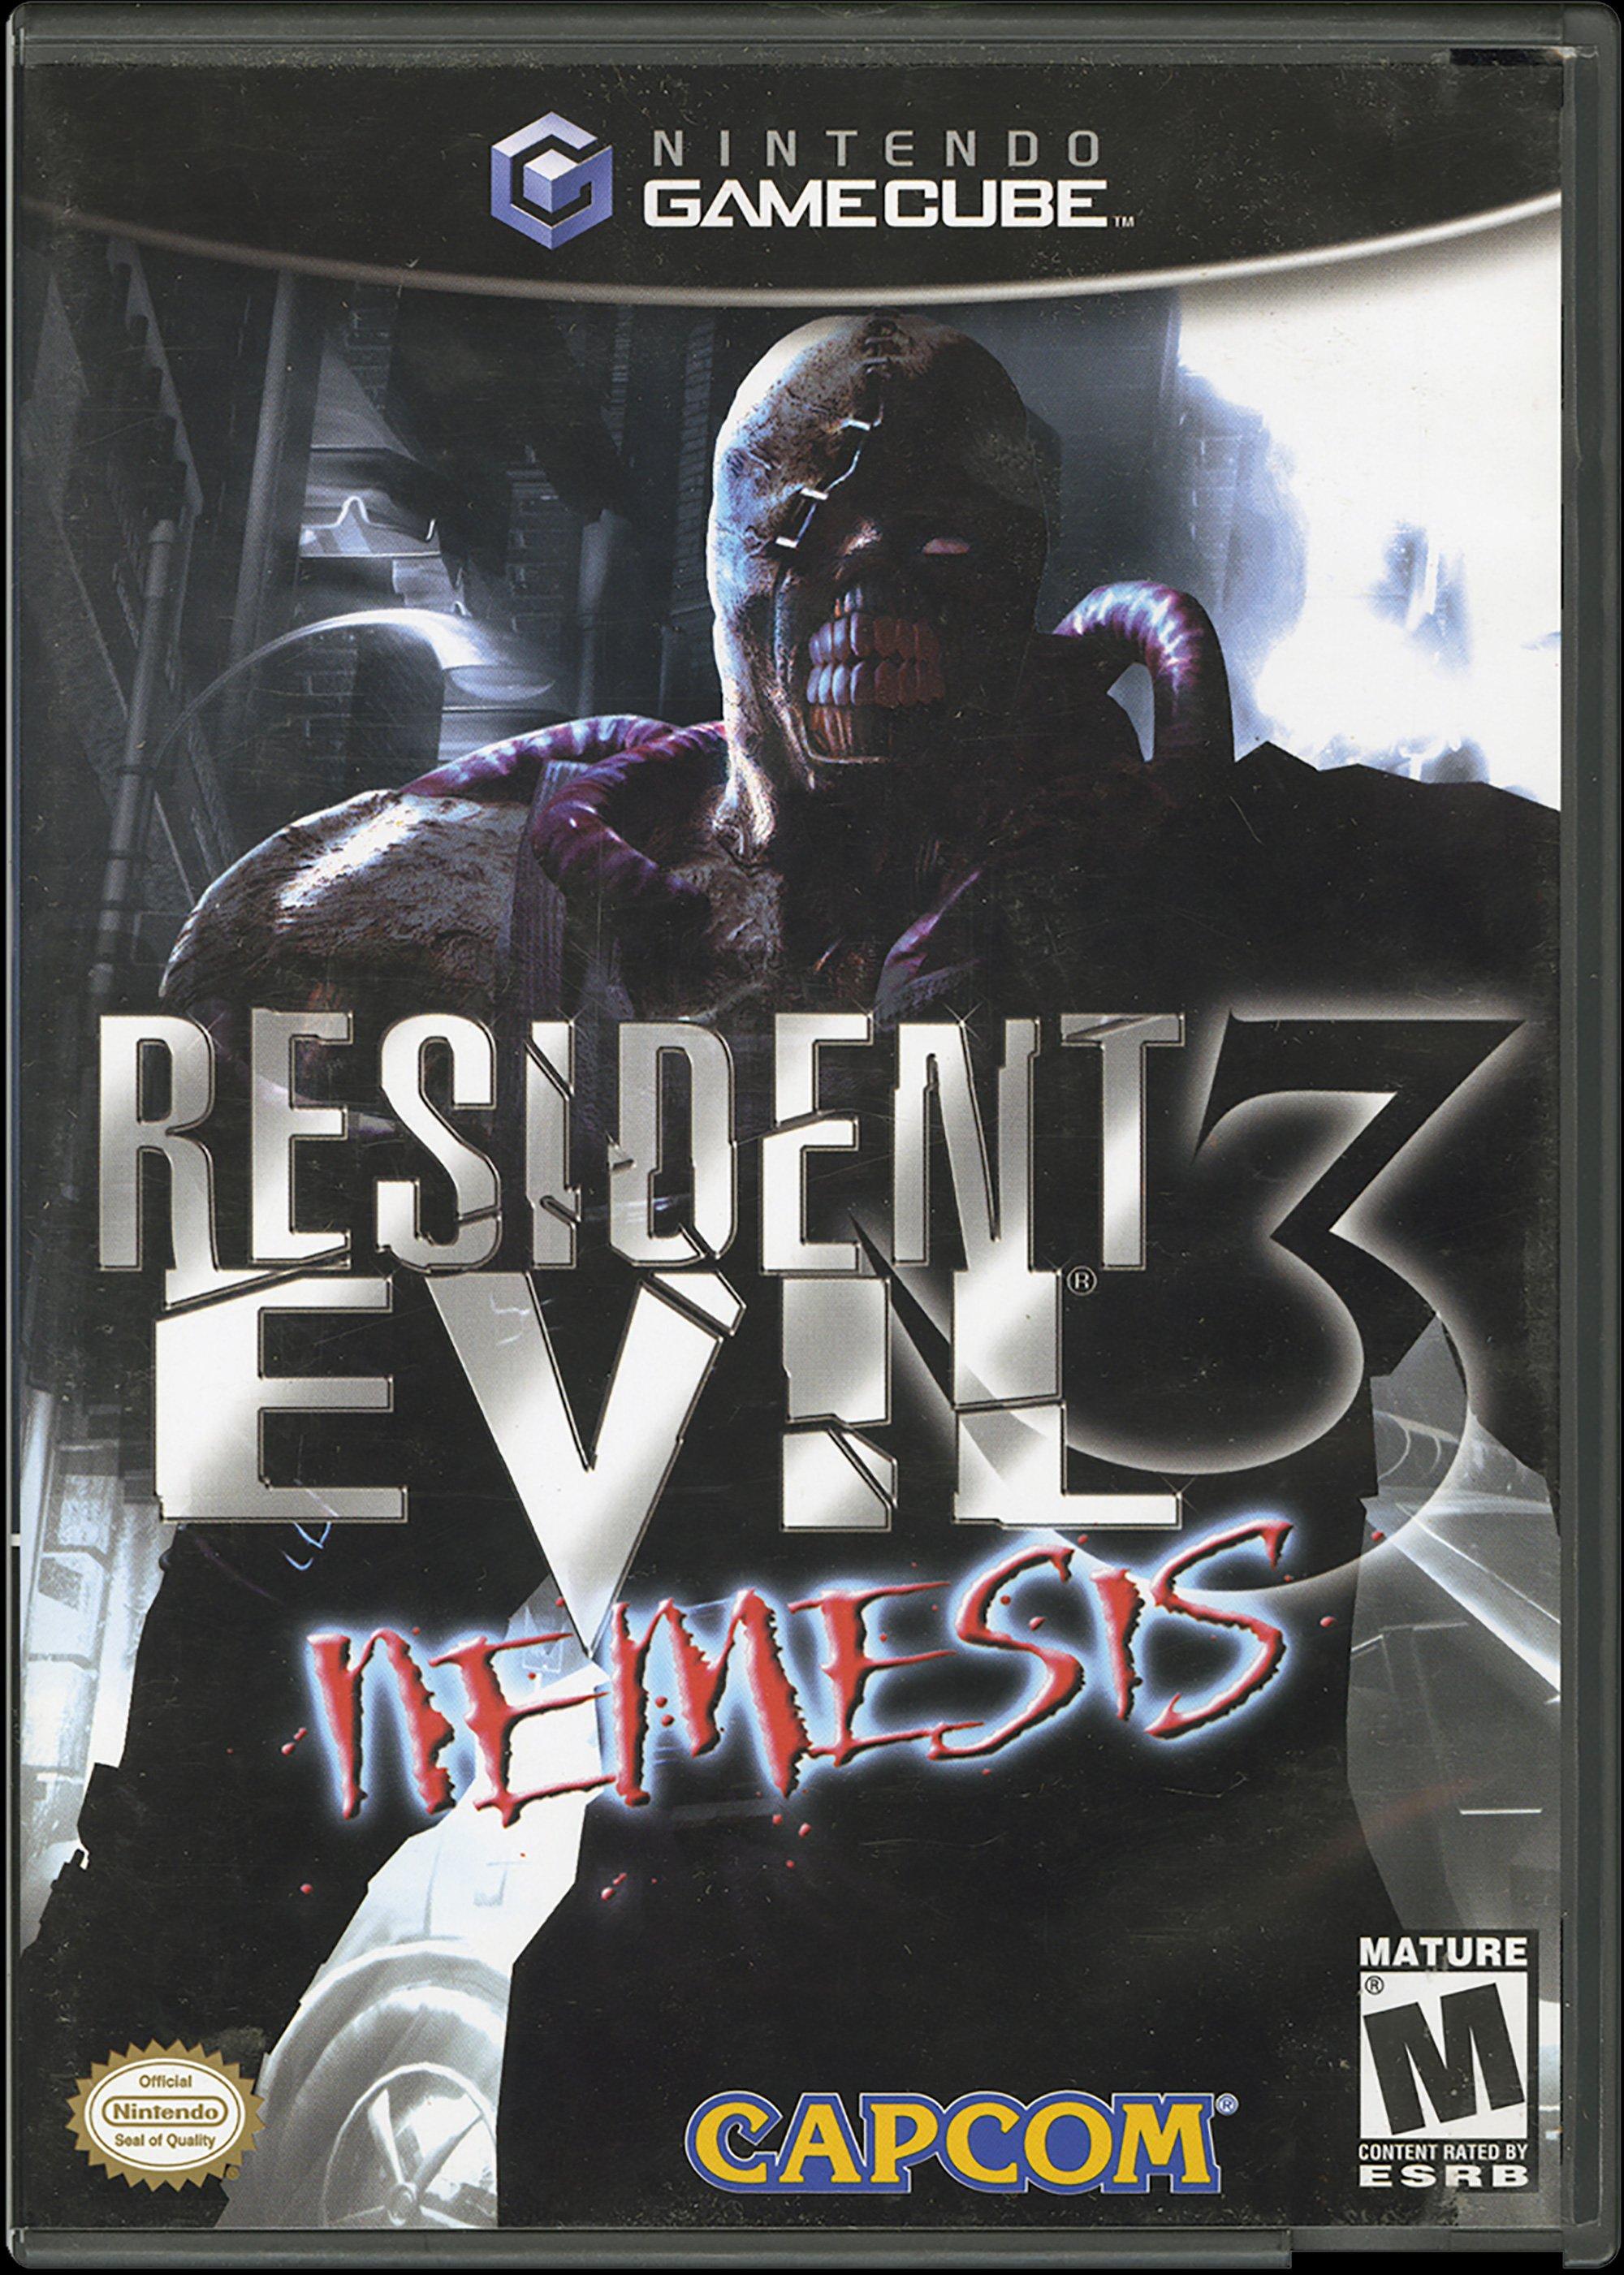 25 Hidden Details In The Resident Evil 2 Reboot Only True Fans Noticed